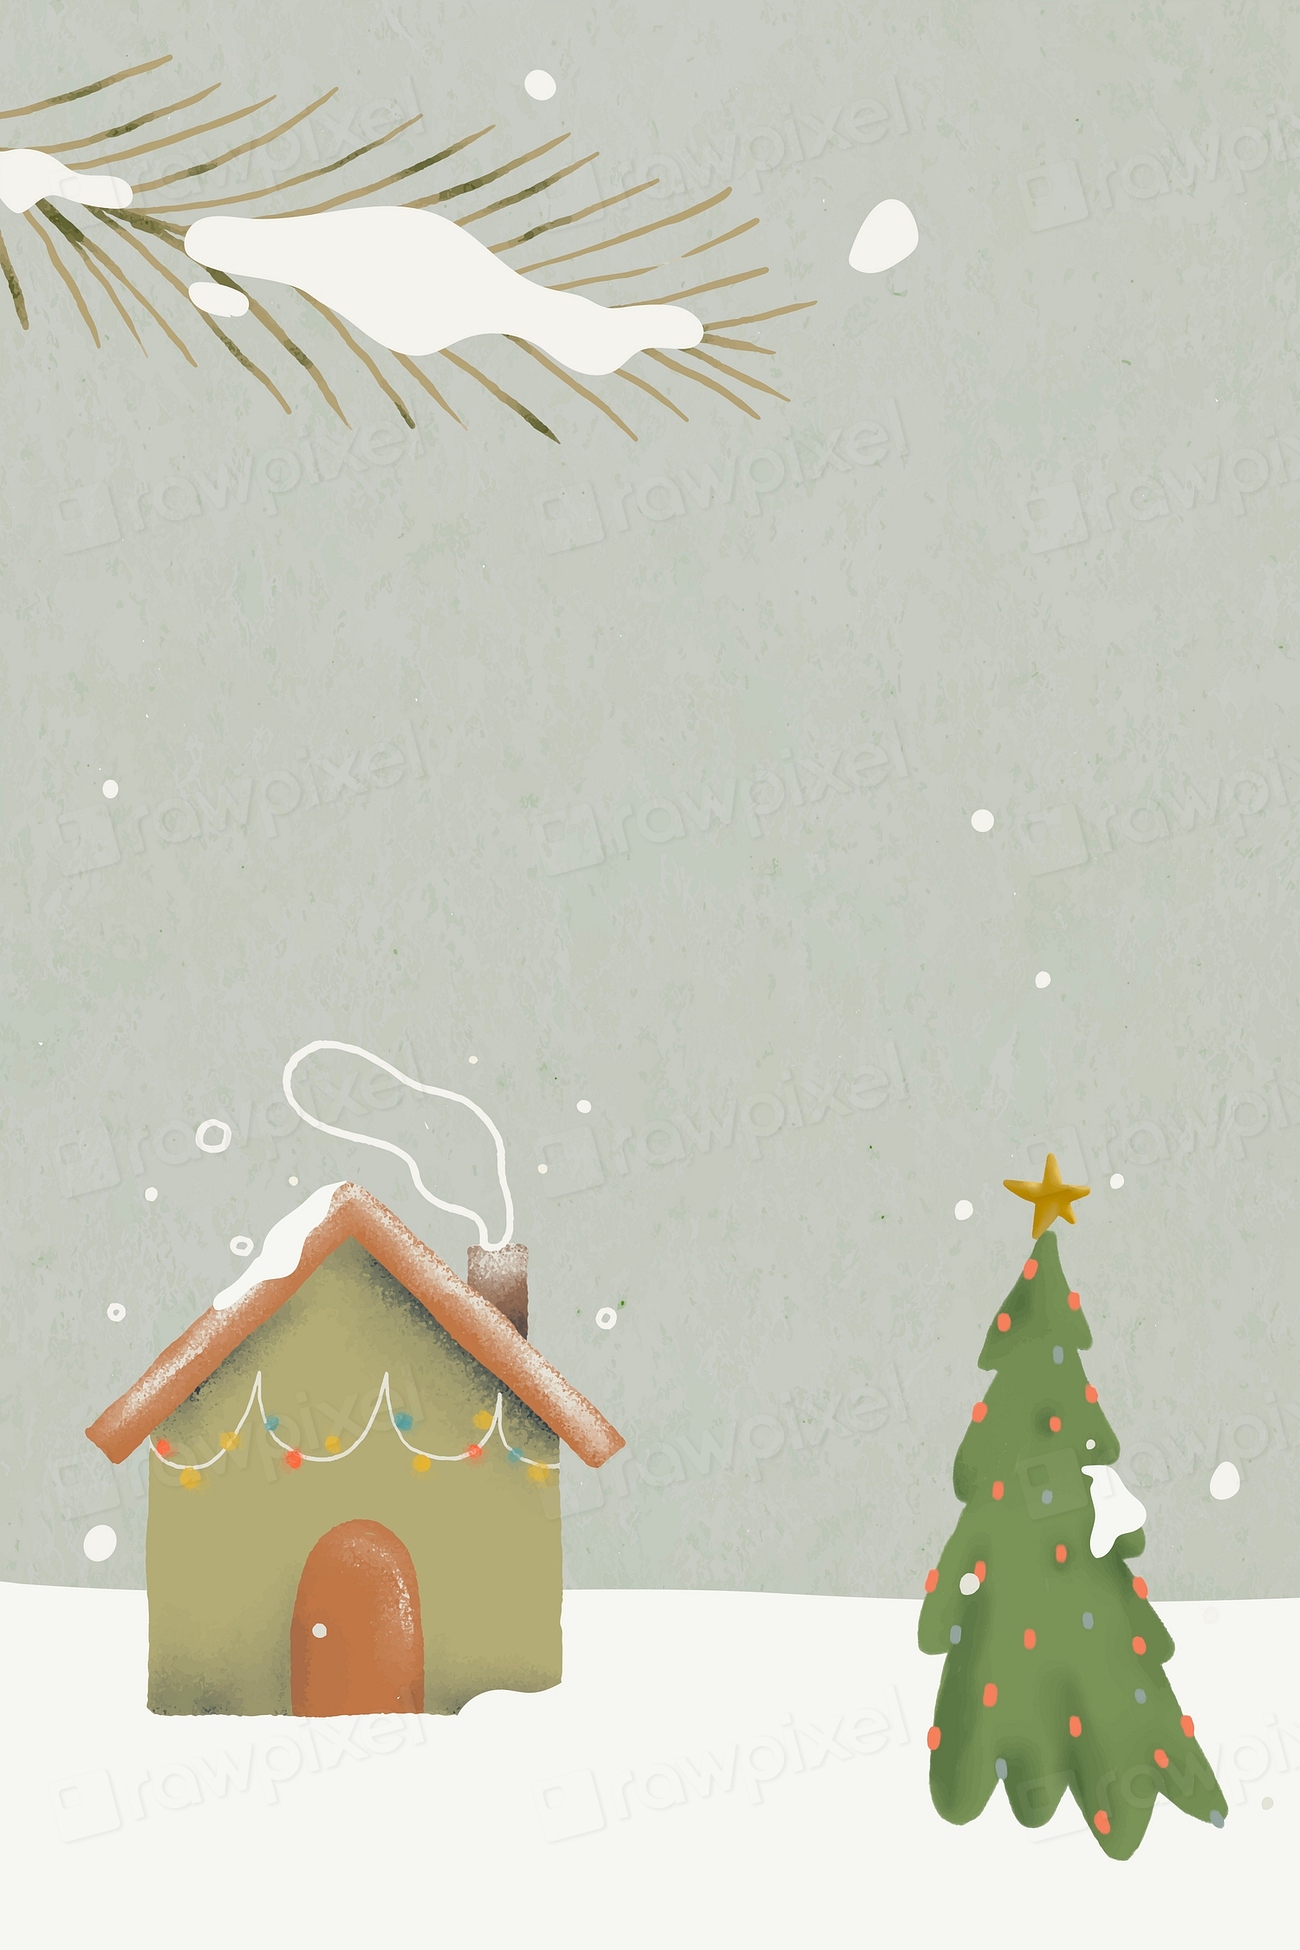 Winter holiday background, Christmas celebration | Free Vector ...